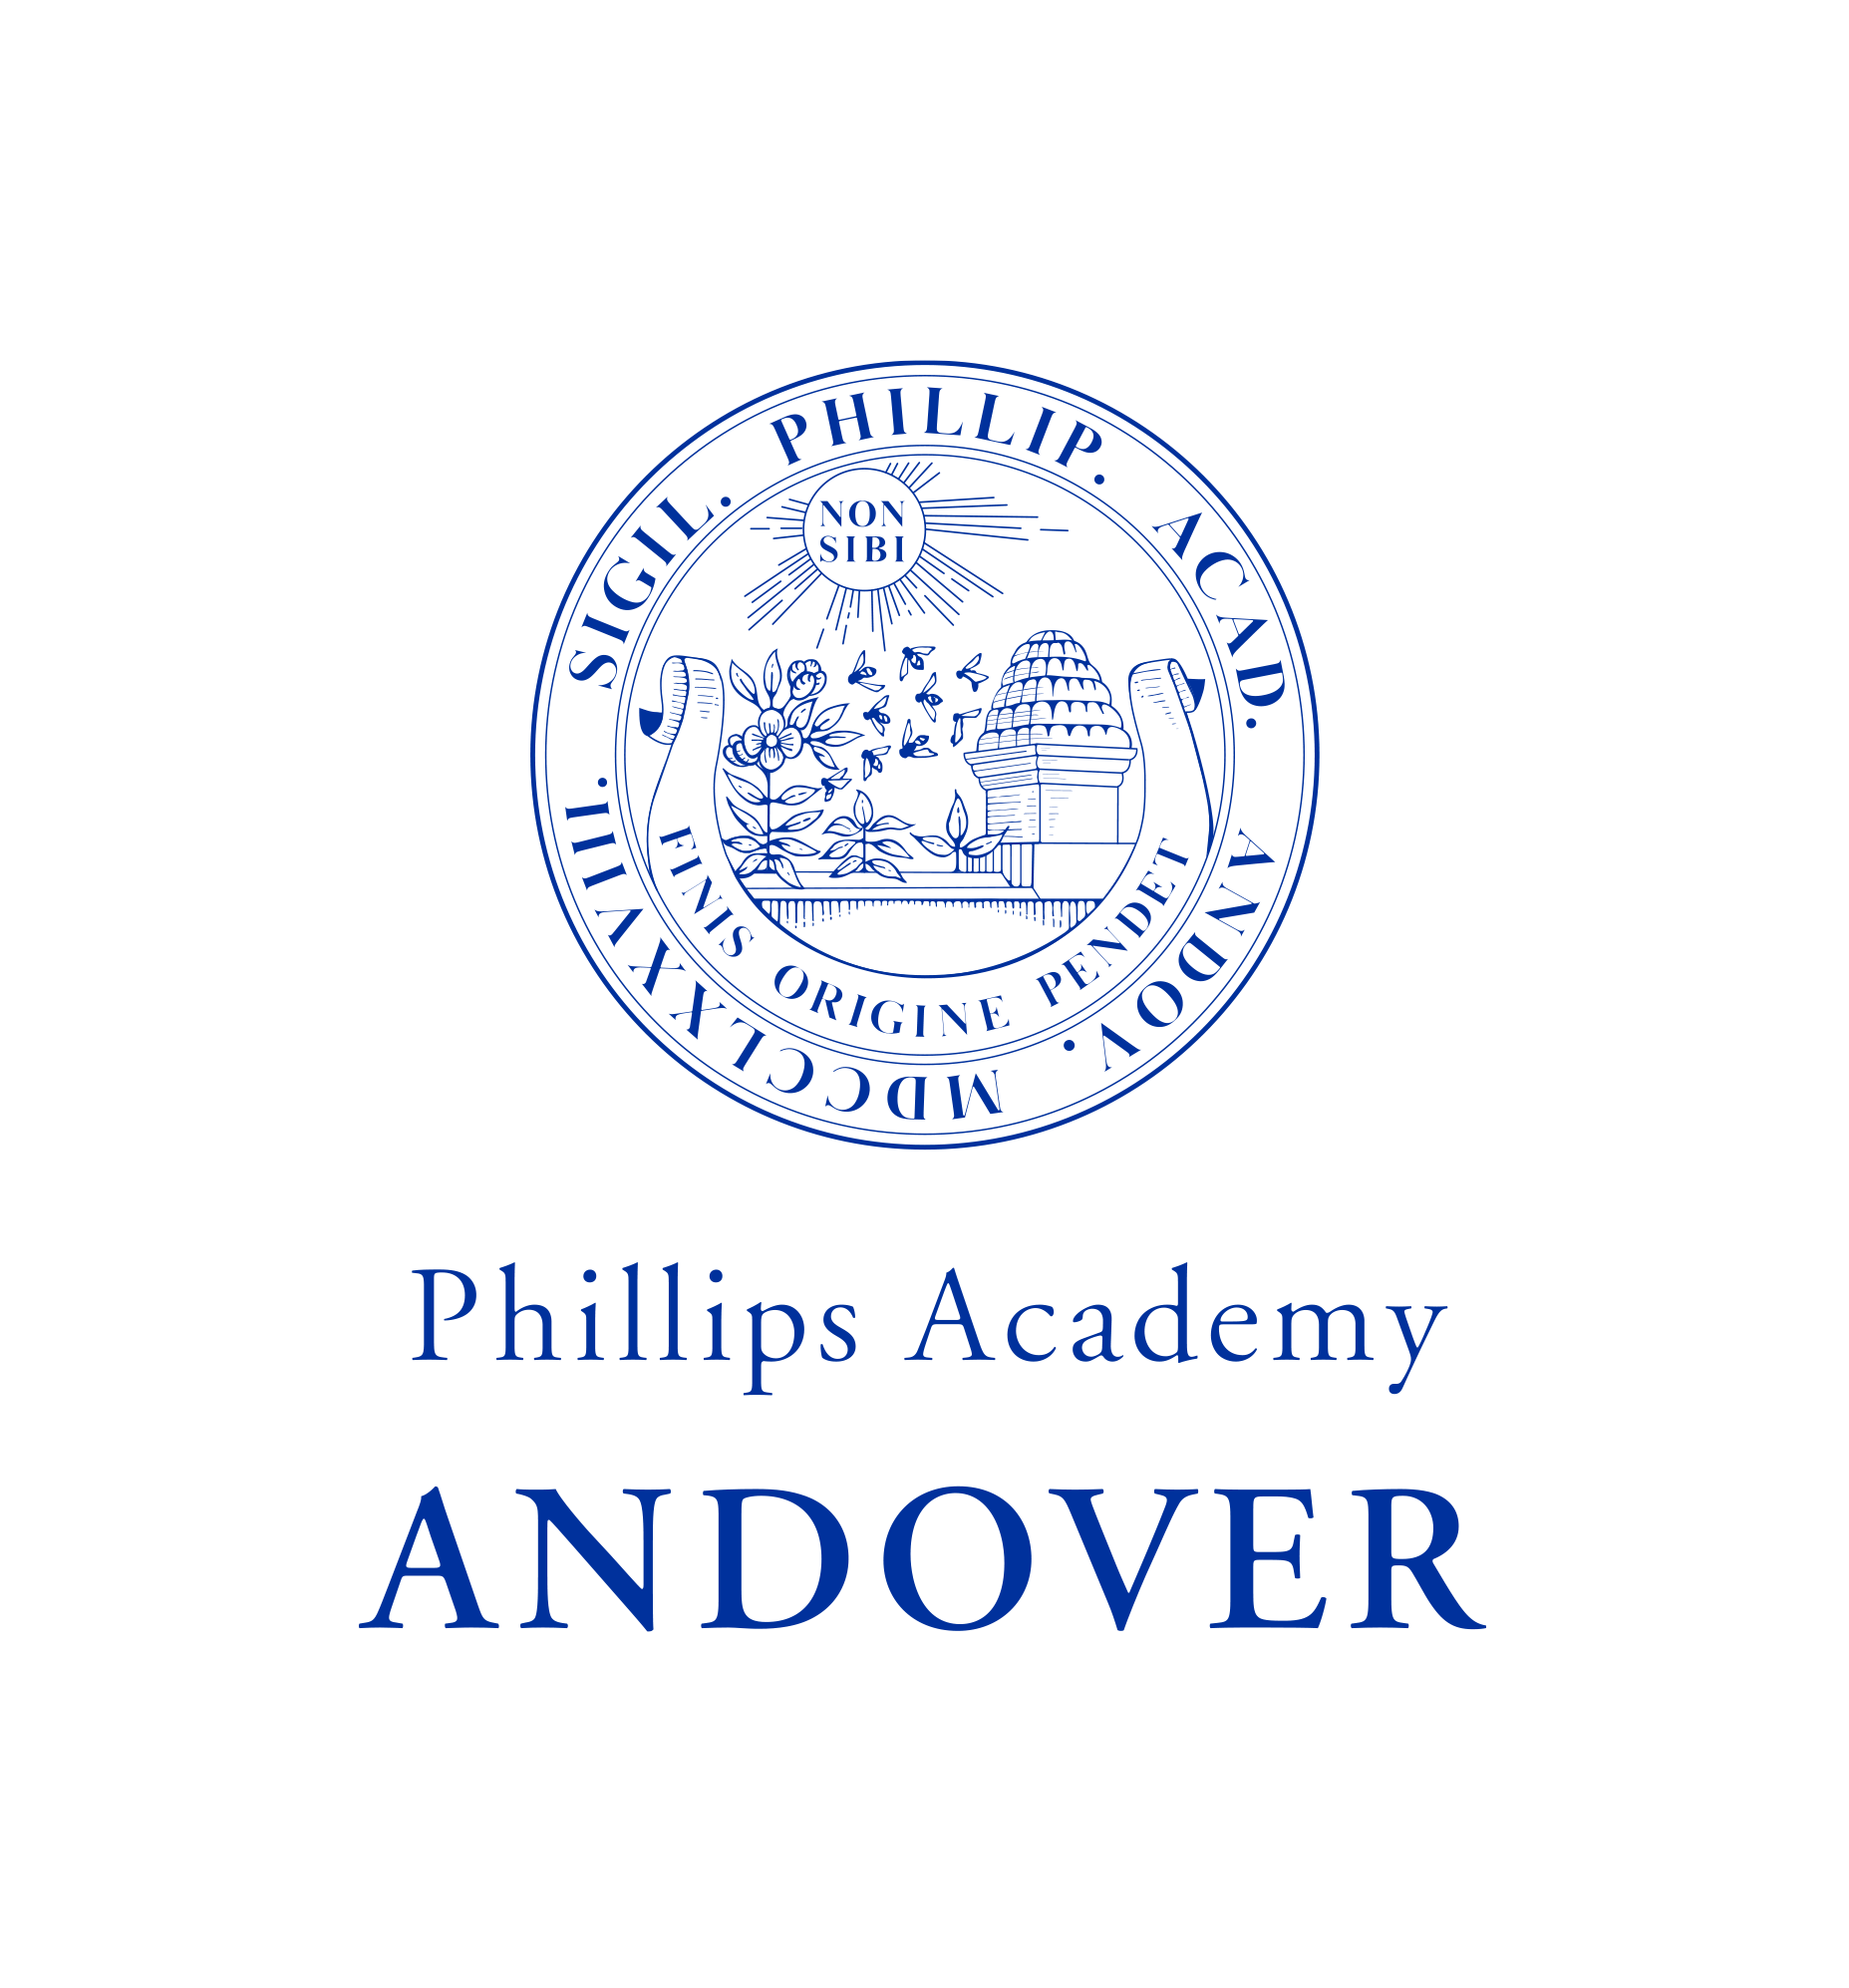 Phillips Academy Andover